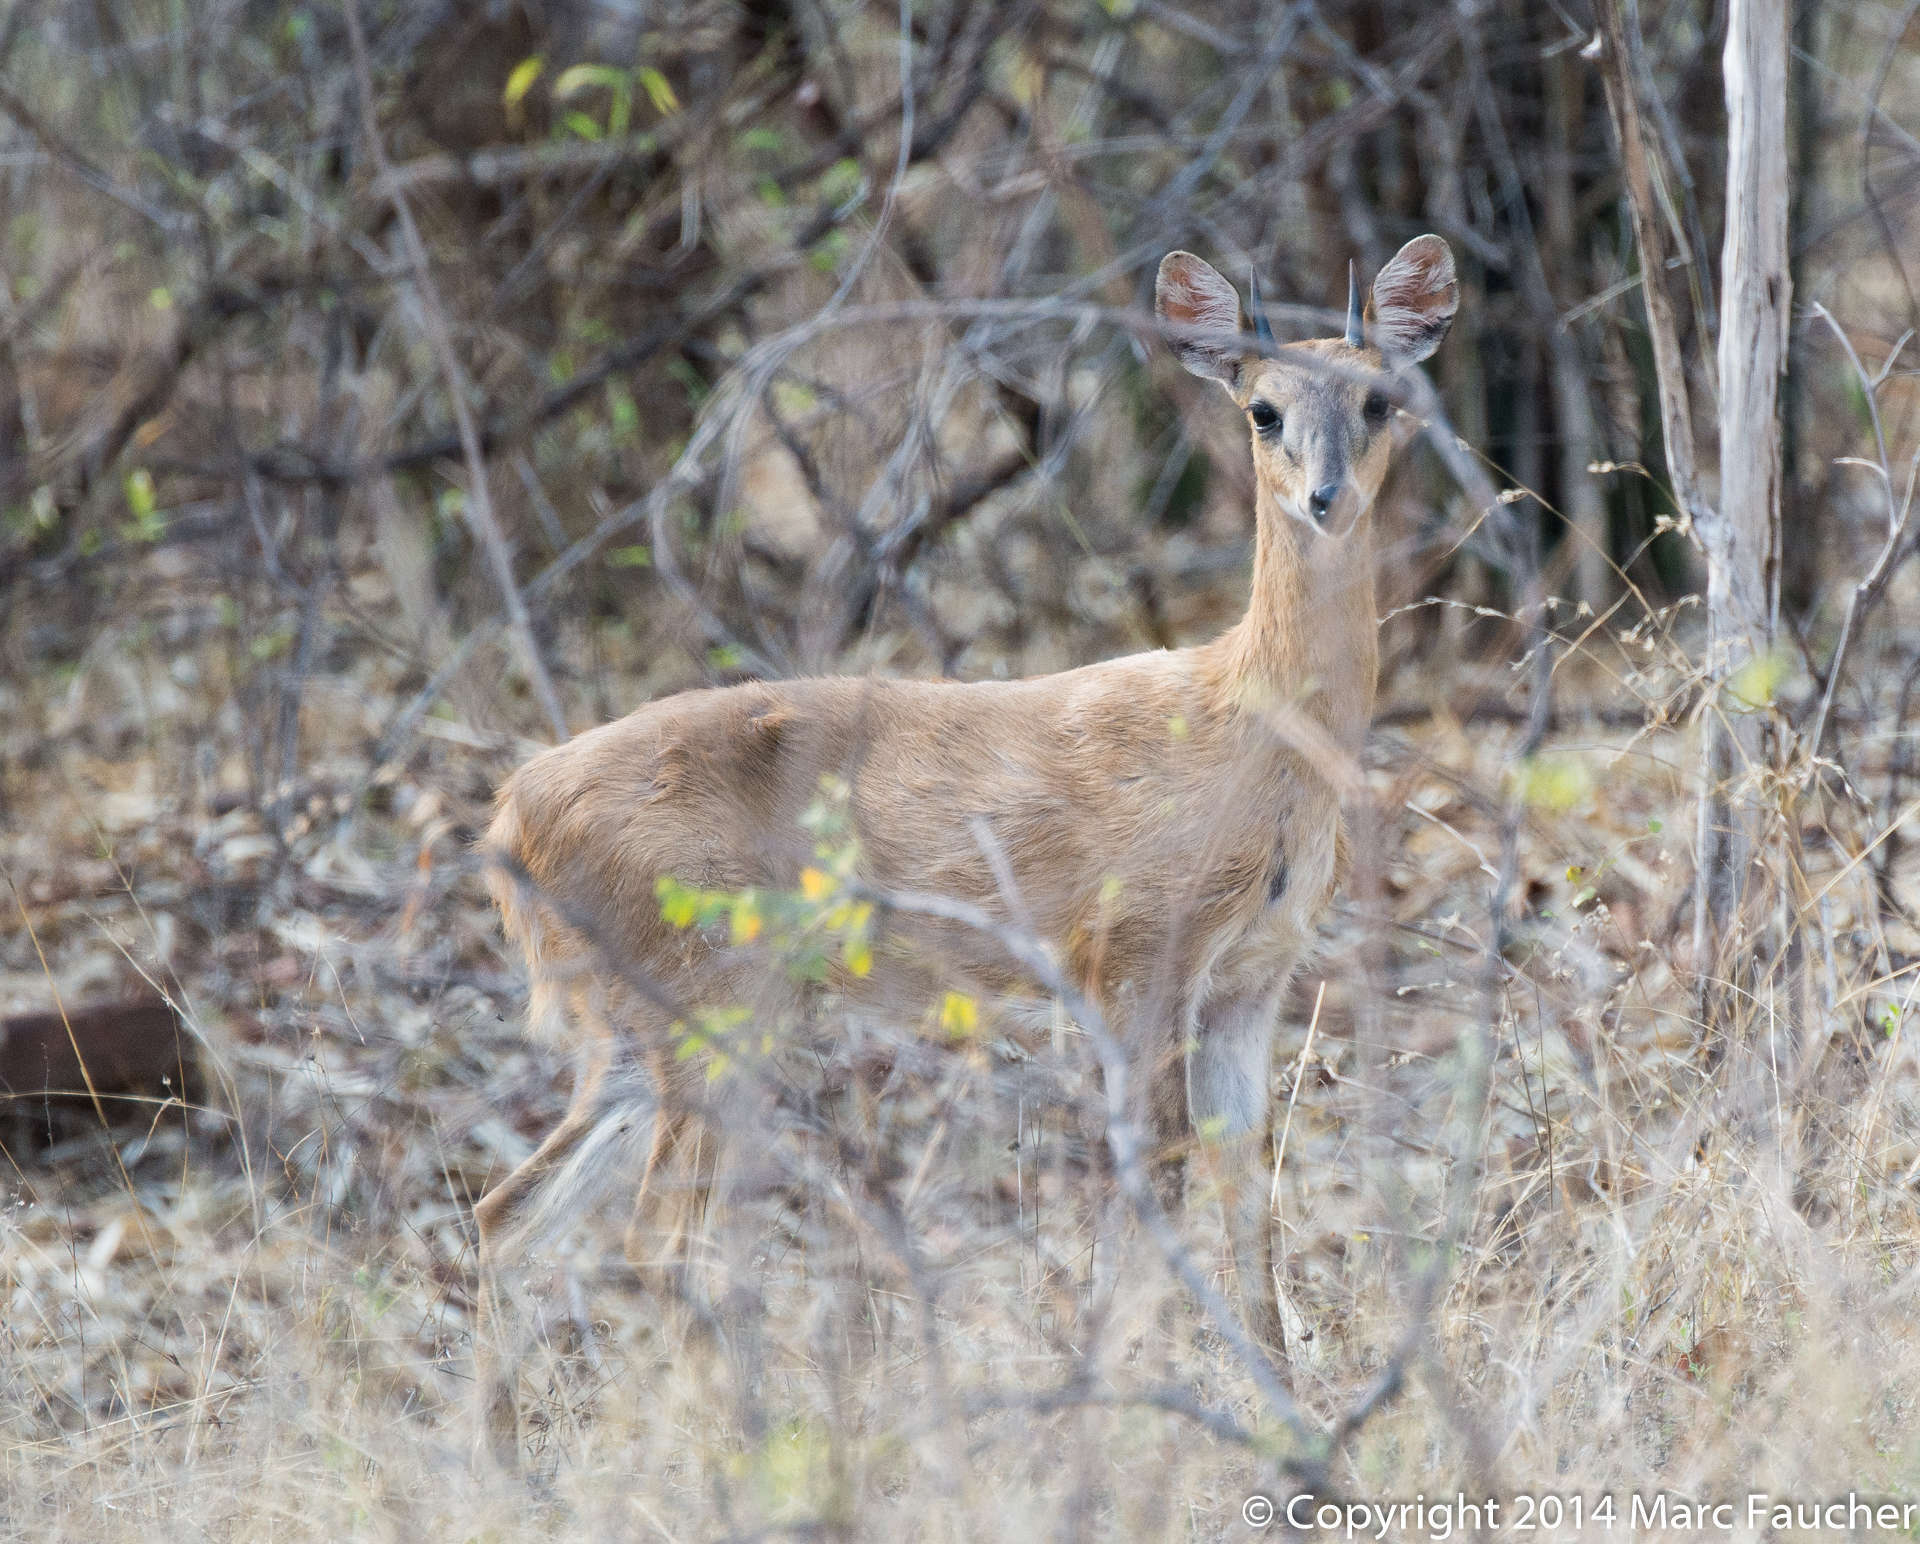 Image of Four-horned Antelope